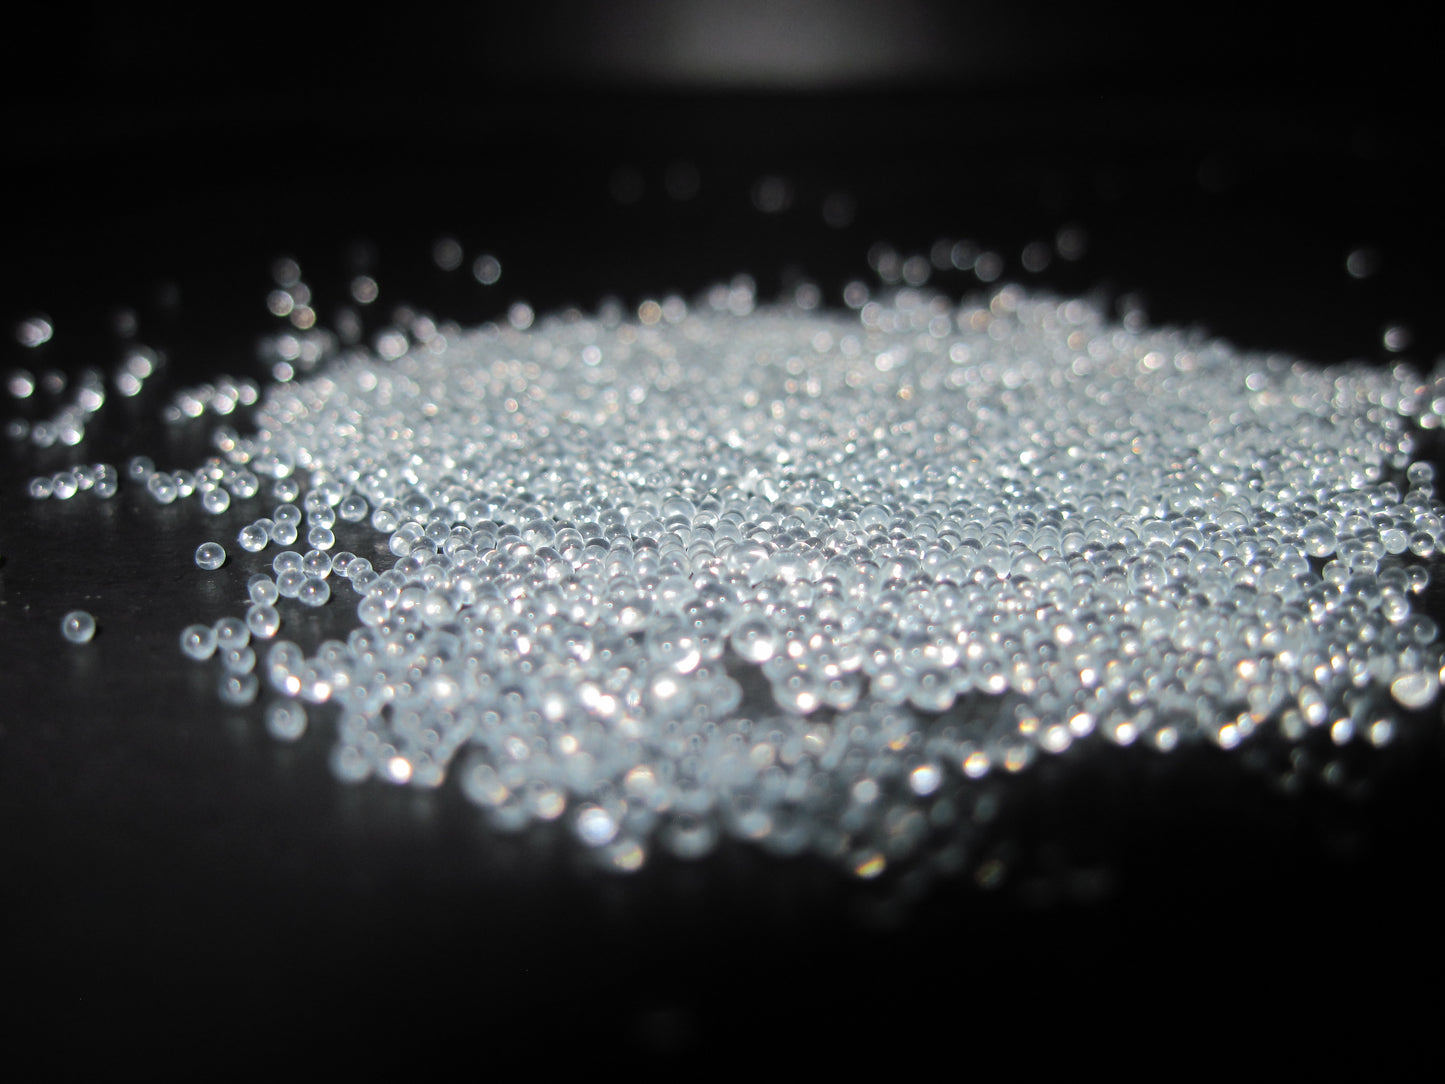 BULK Reflective Glass Beads - 50 pound bags